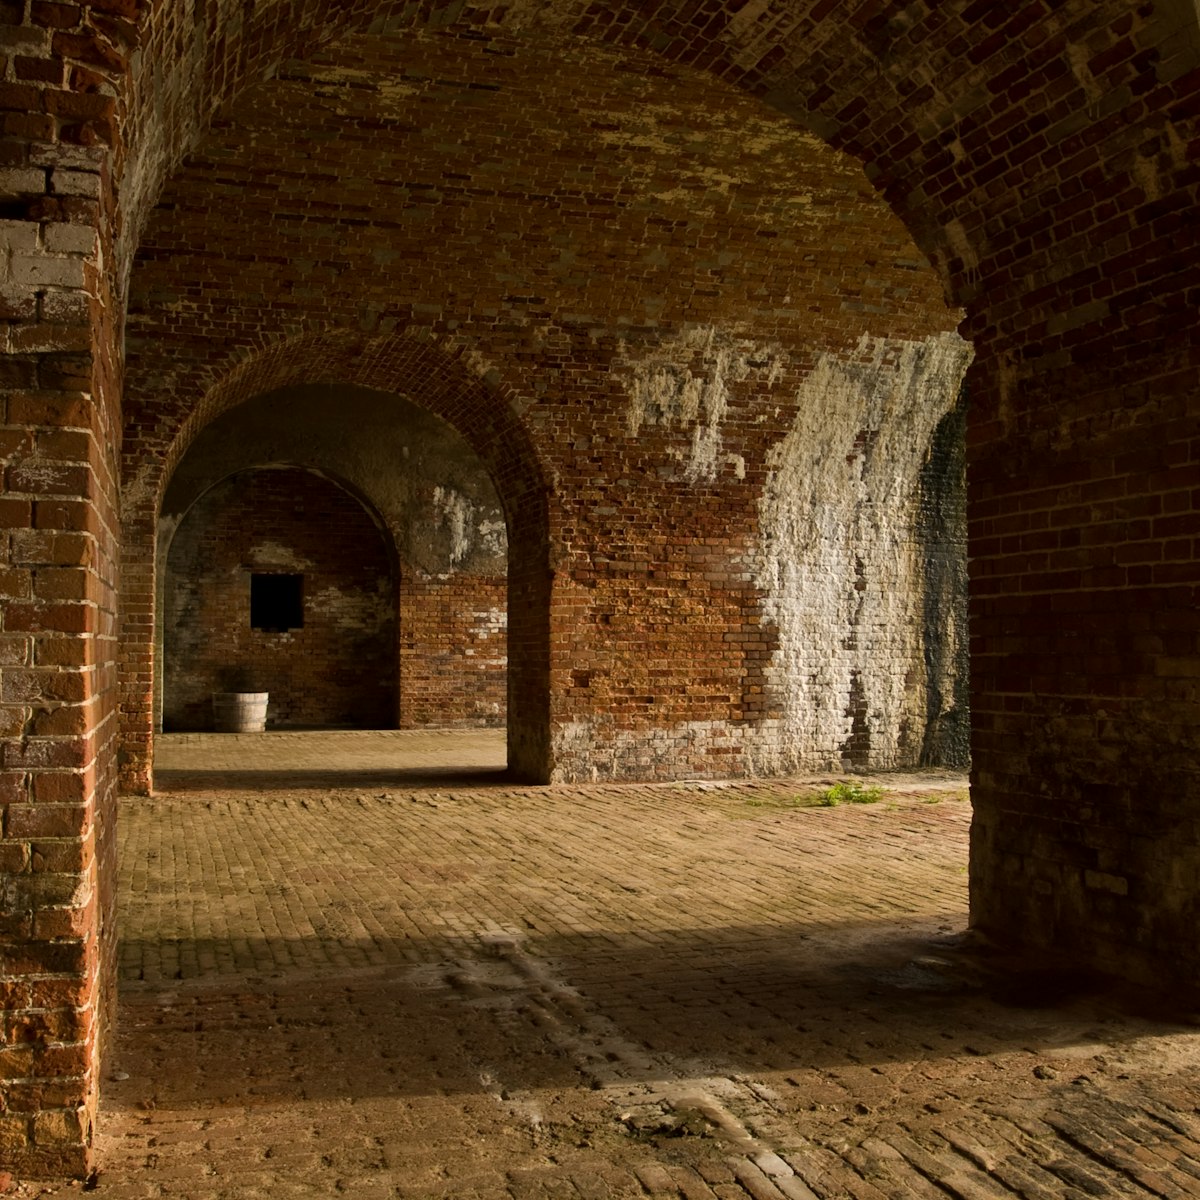 Brick Hallway of Fort Morgan.